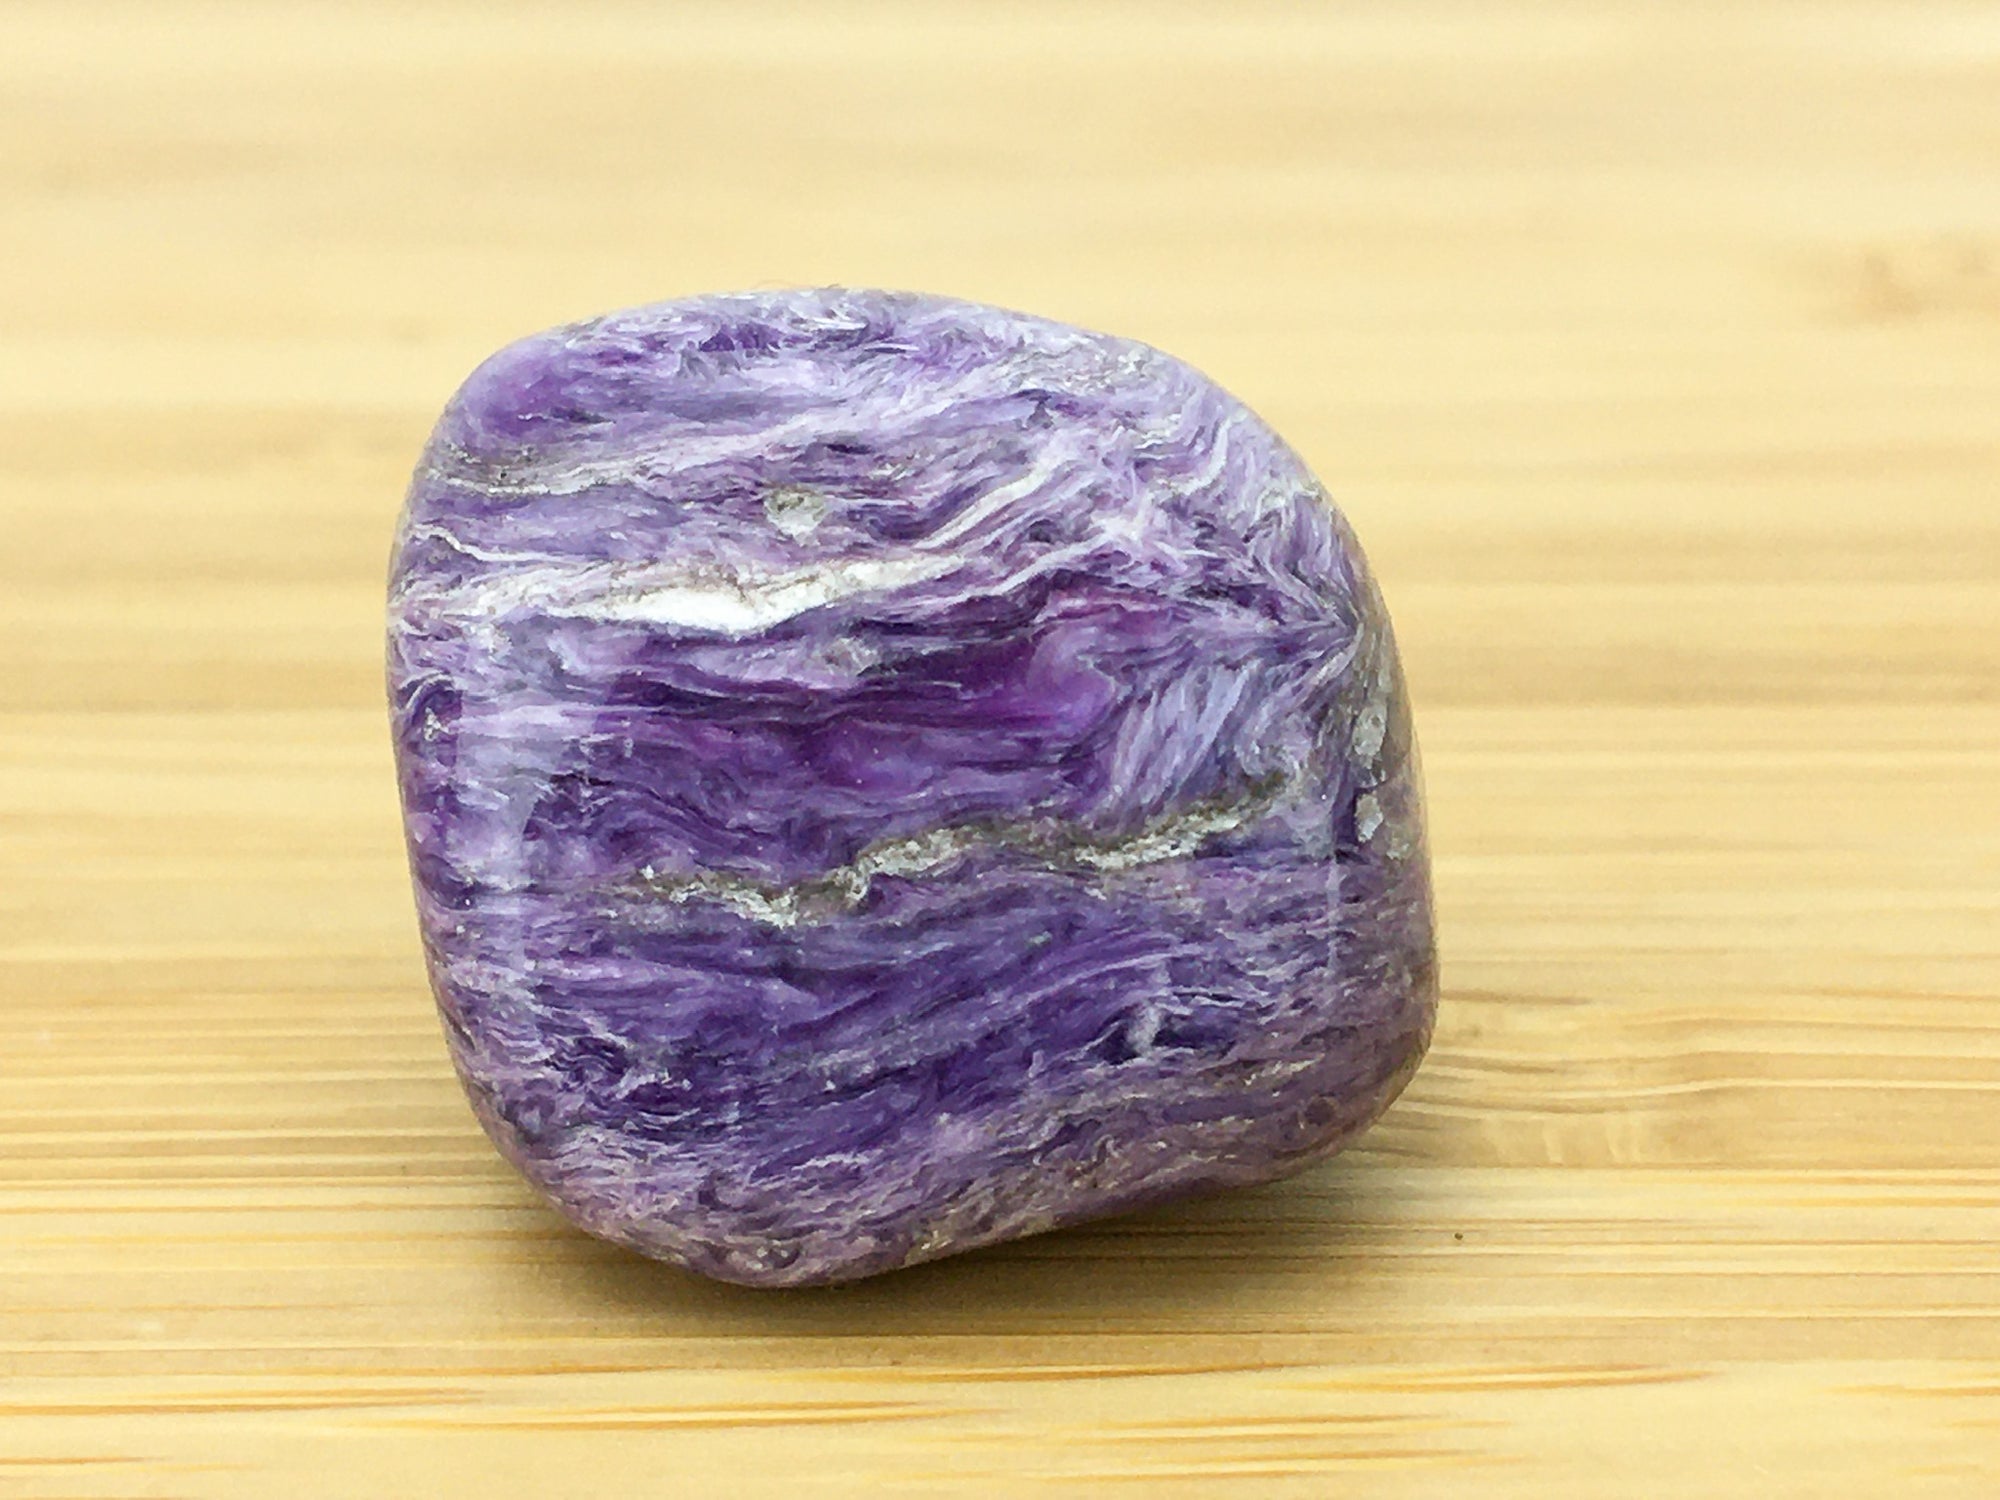 chariot tumble stone. shows distinctive purple and white banding